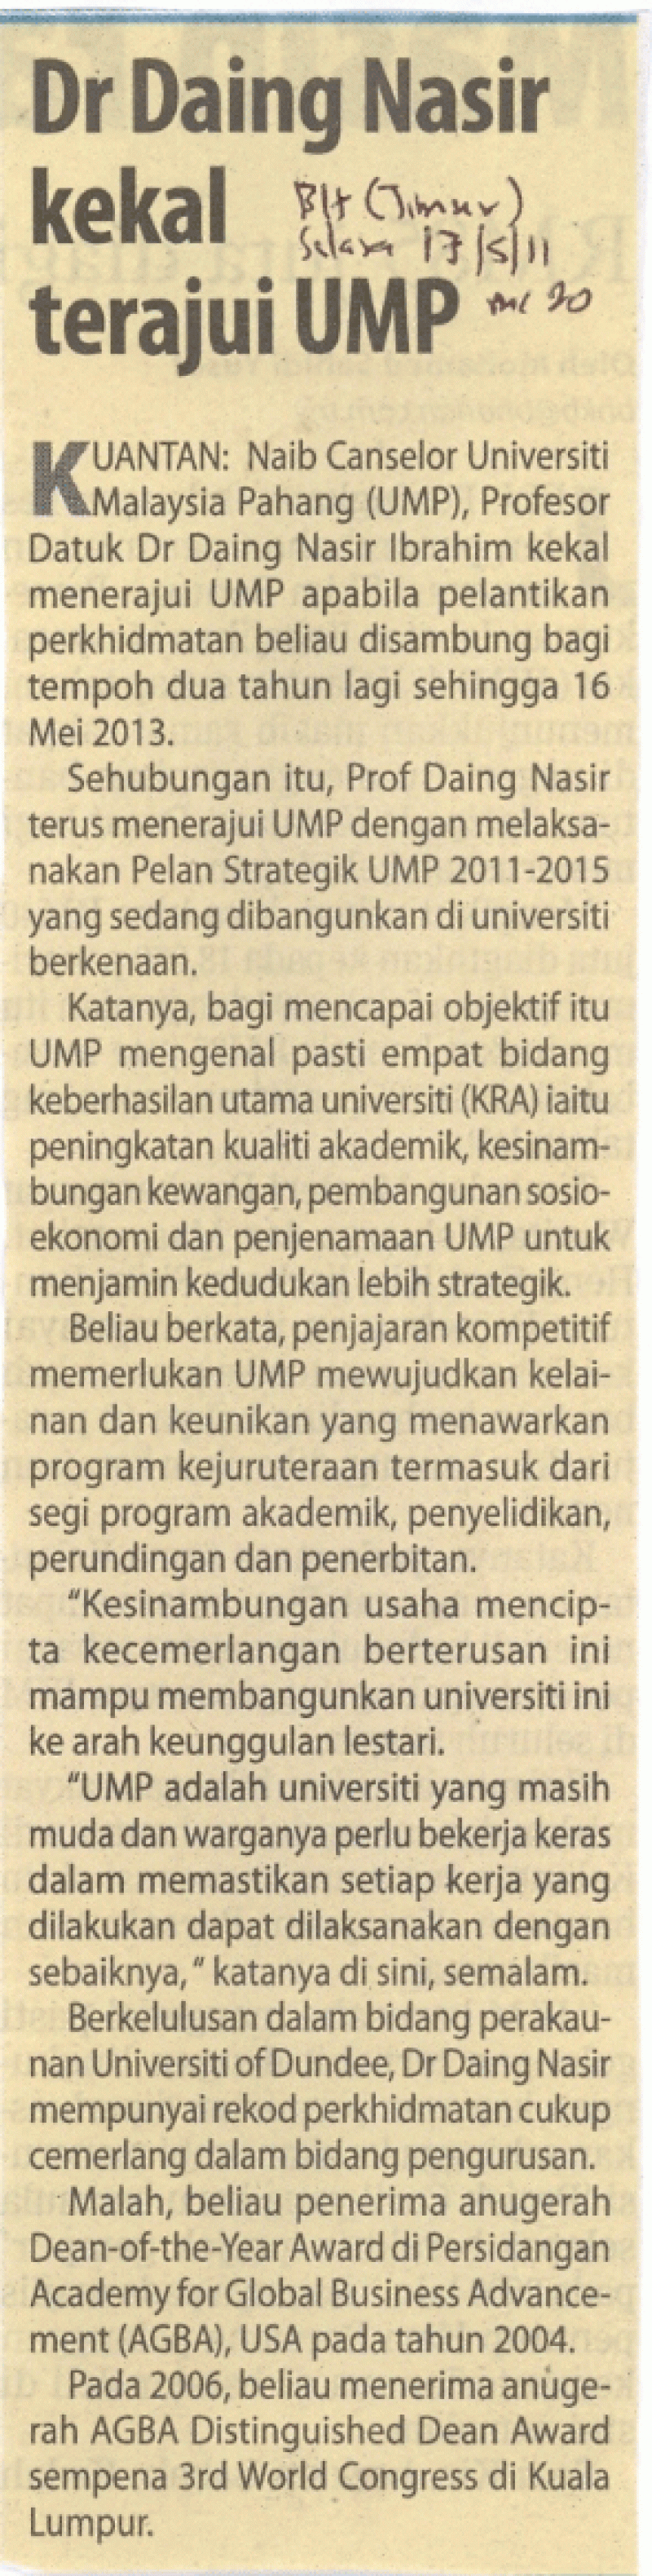 Dr Daing Kekal Terajui UMP